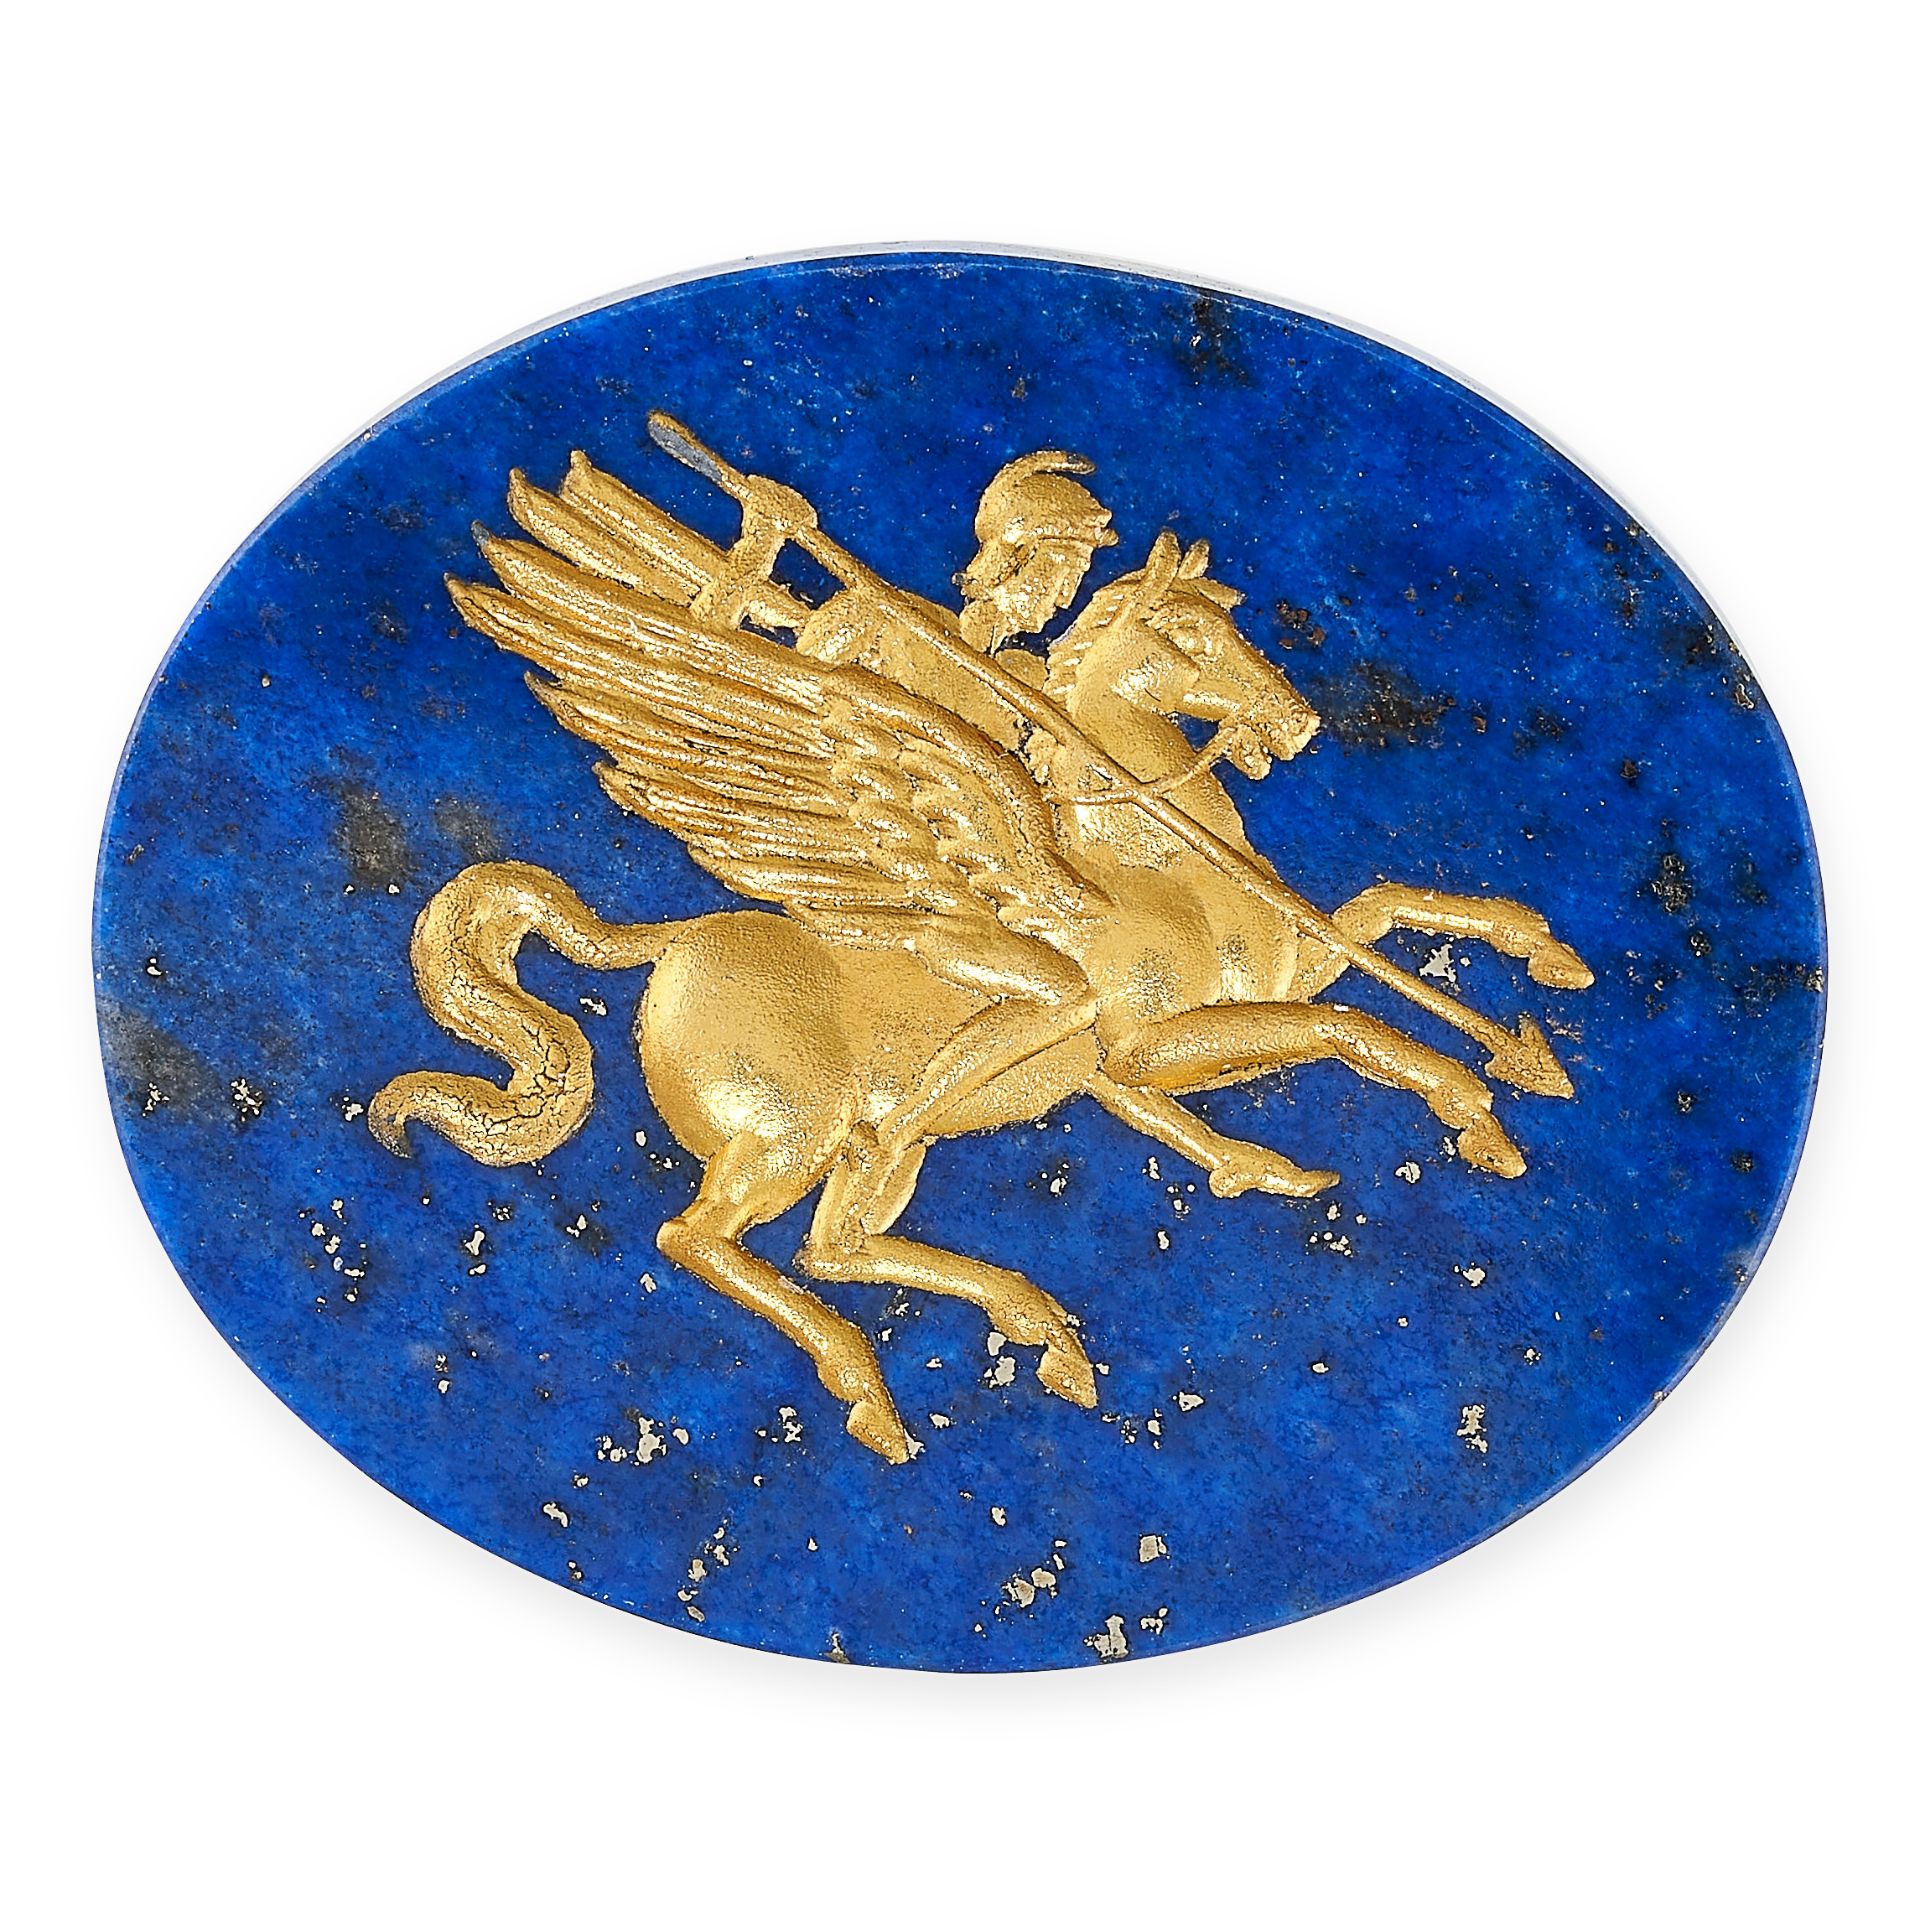 A LAPIS LAZULI INTAGLIO carved to depict Bellerophon riding Pegasus, 2.6cm, 2.8g.